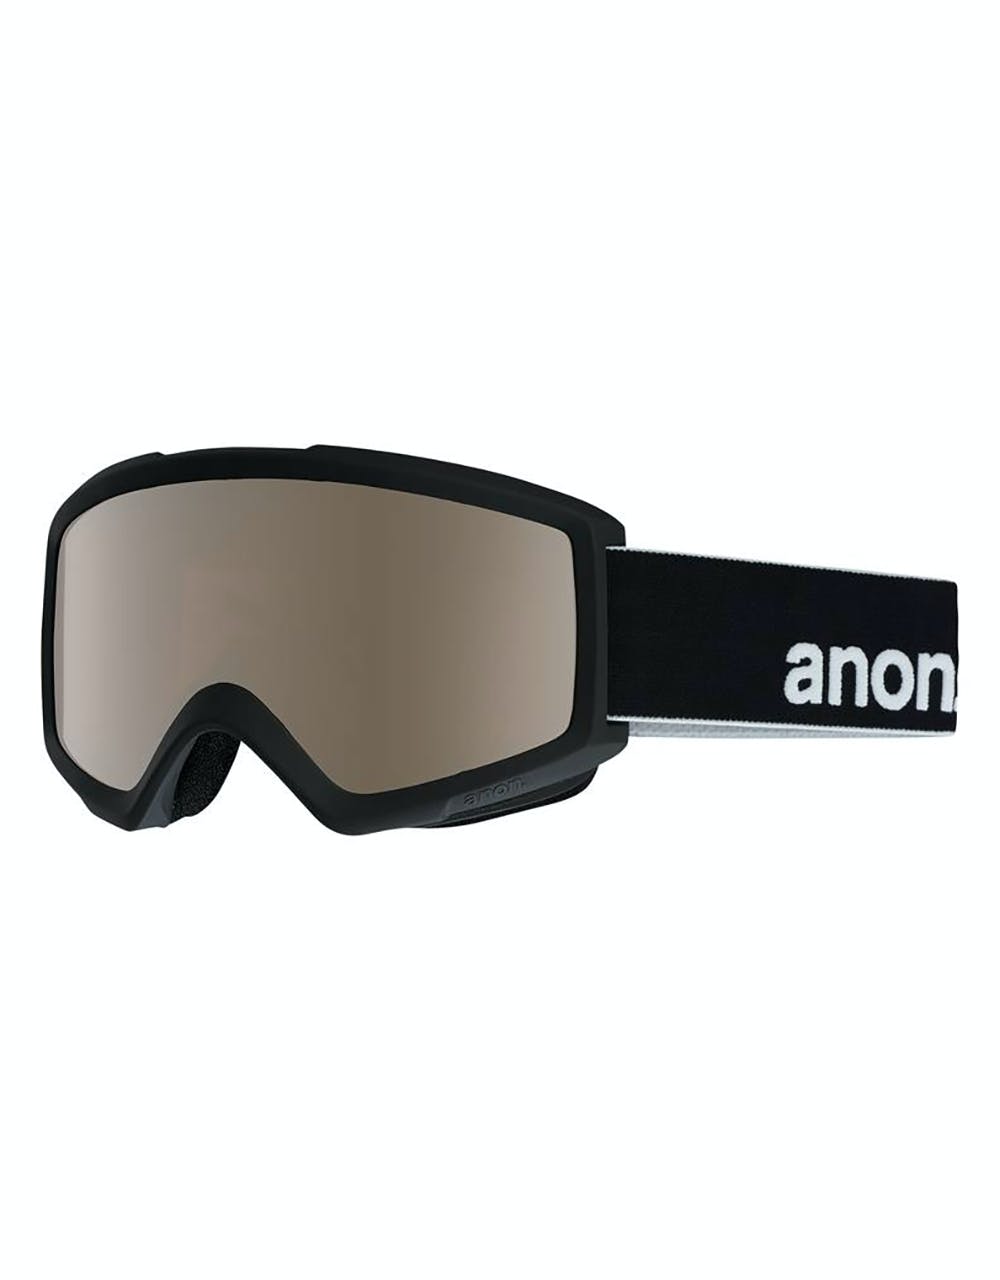 Anon Helix 2.0 Snowboard Goggles - Black/Silver Amber